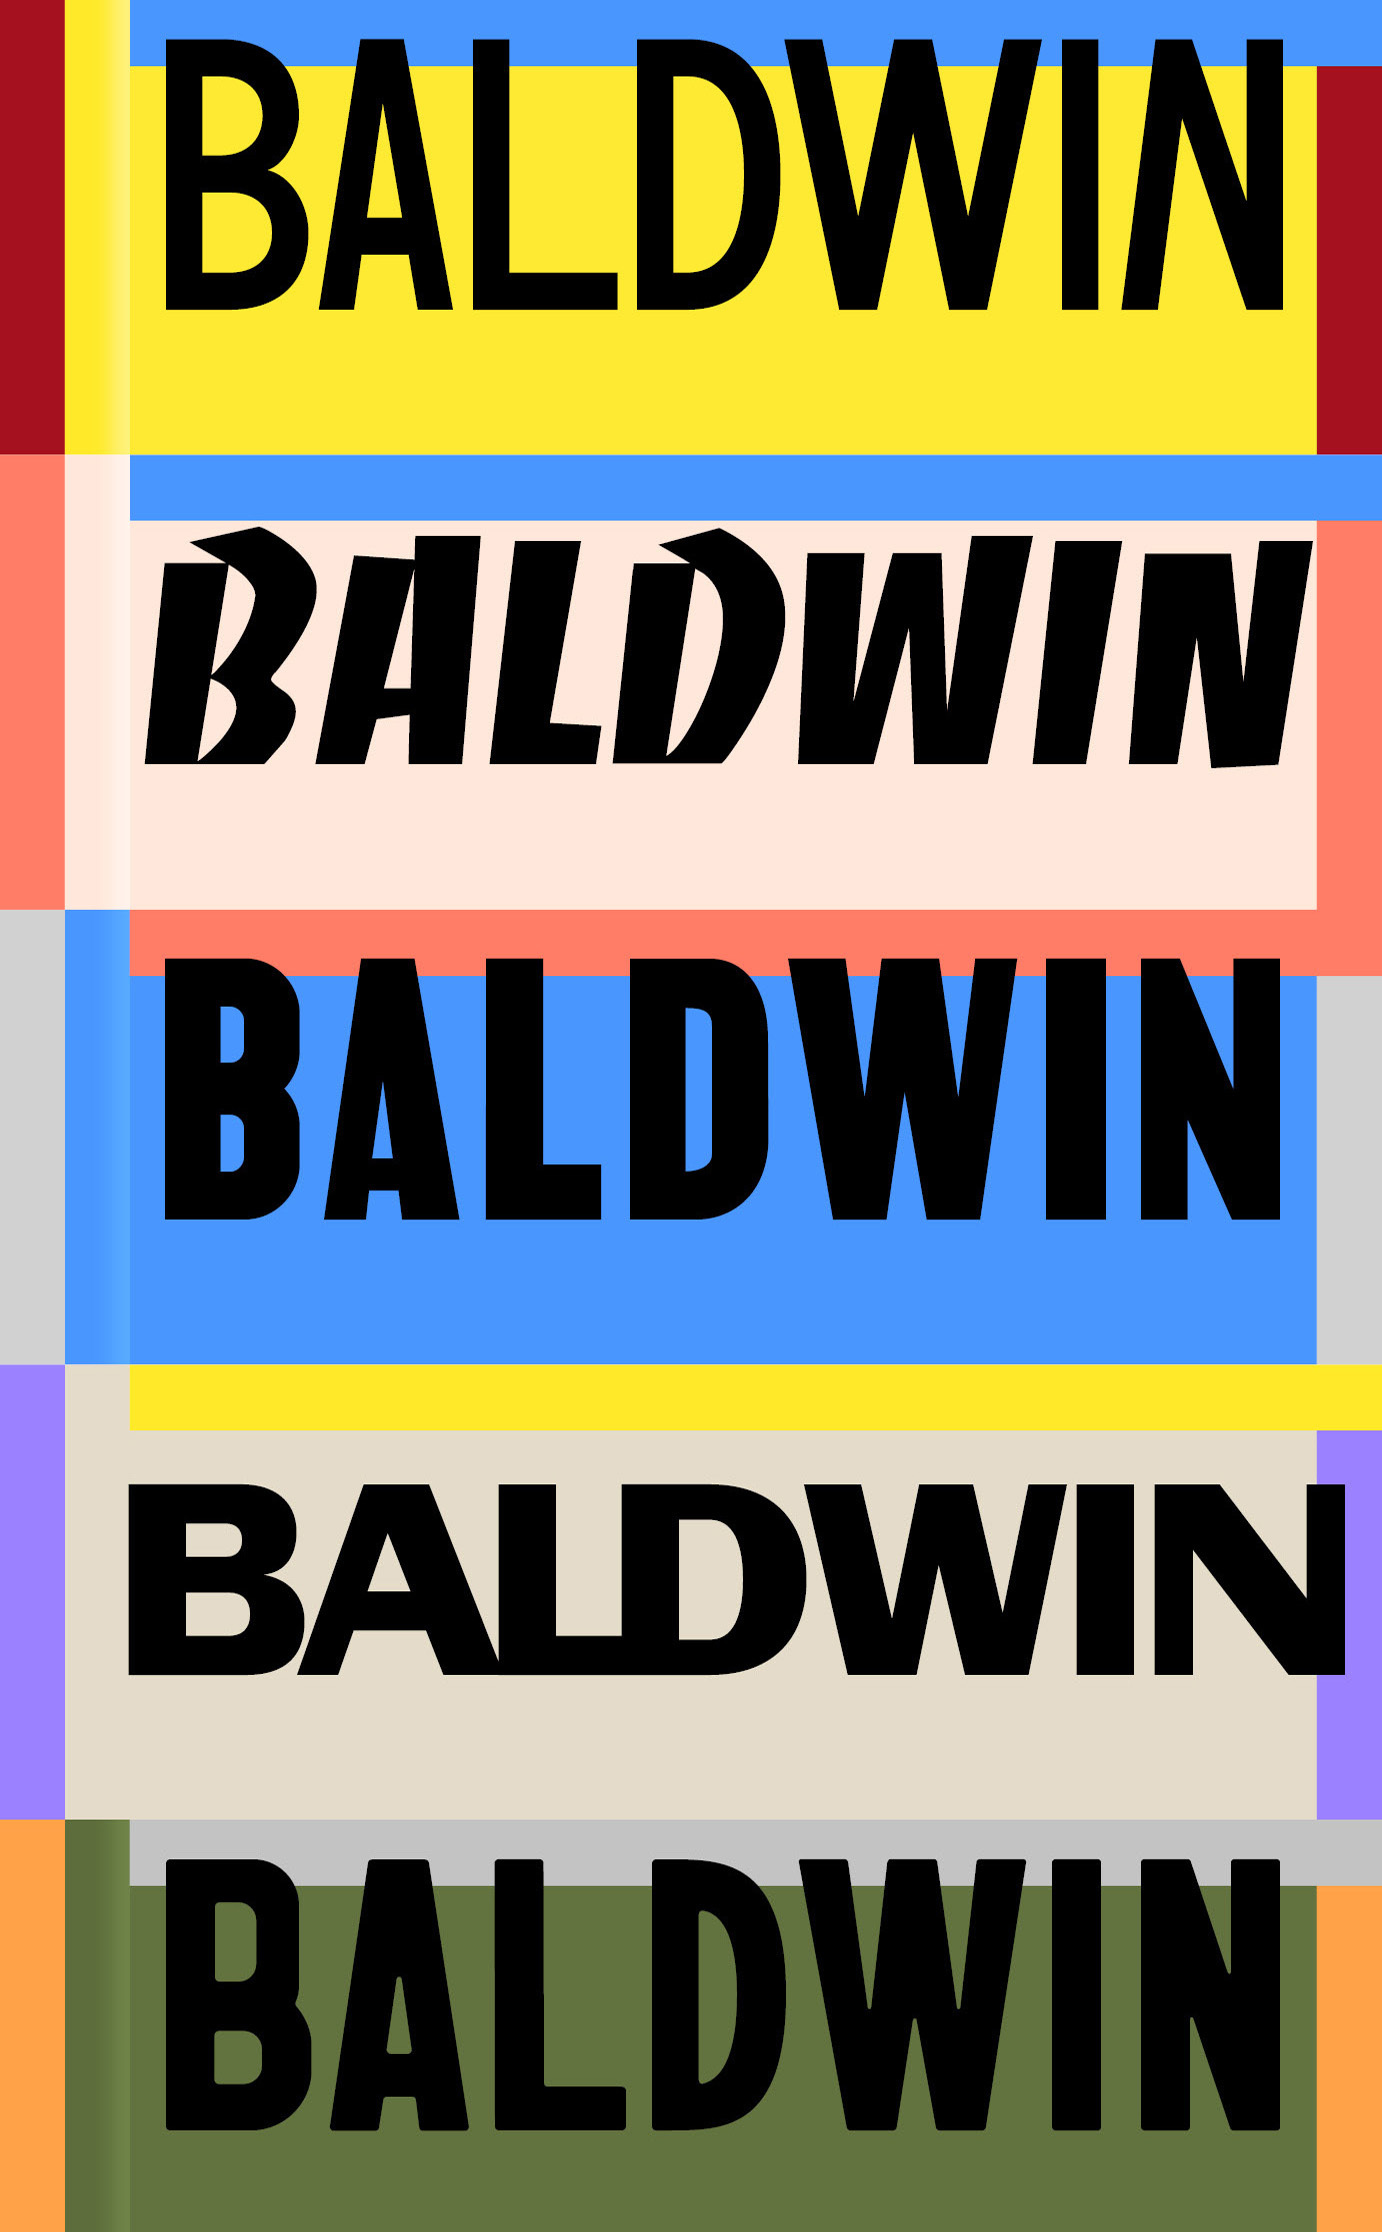 James Baldwin: prenumerata